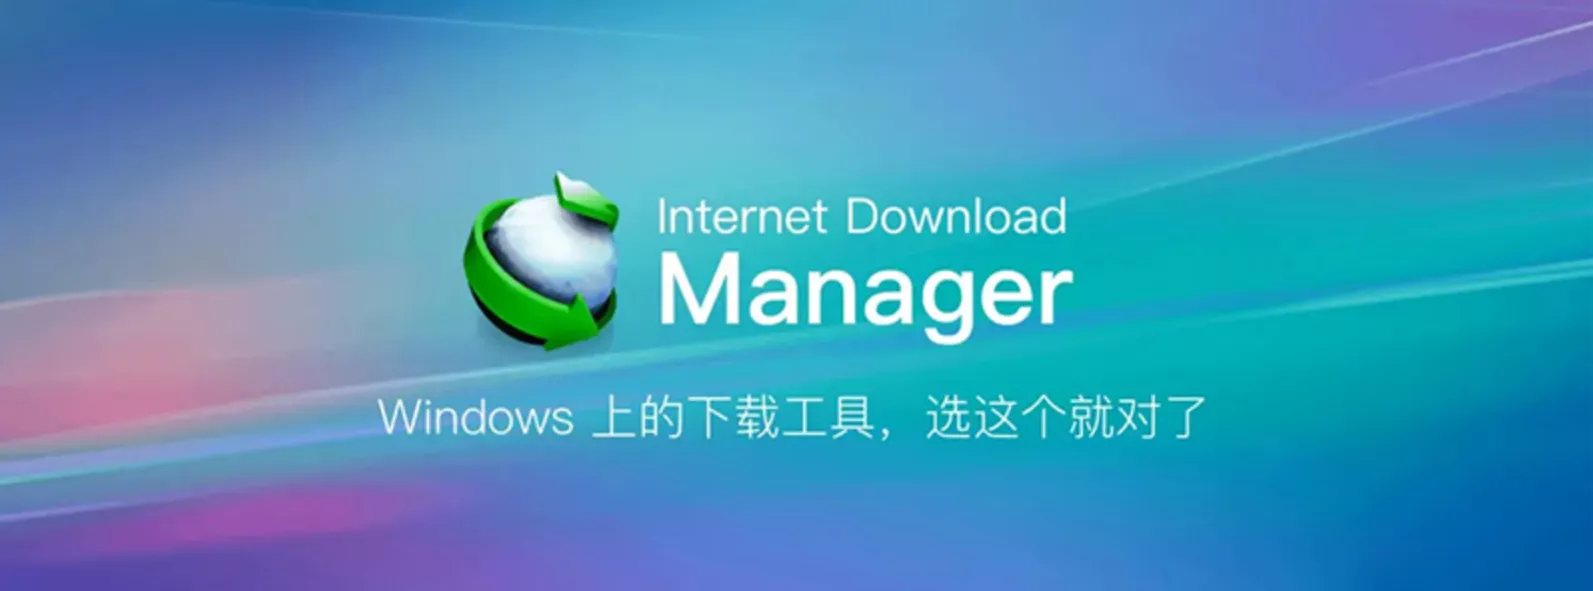 Internet Download Manager 6.41.17 绿色特别版 (IDM)-OMii 